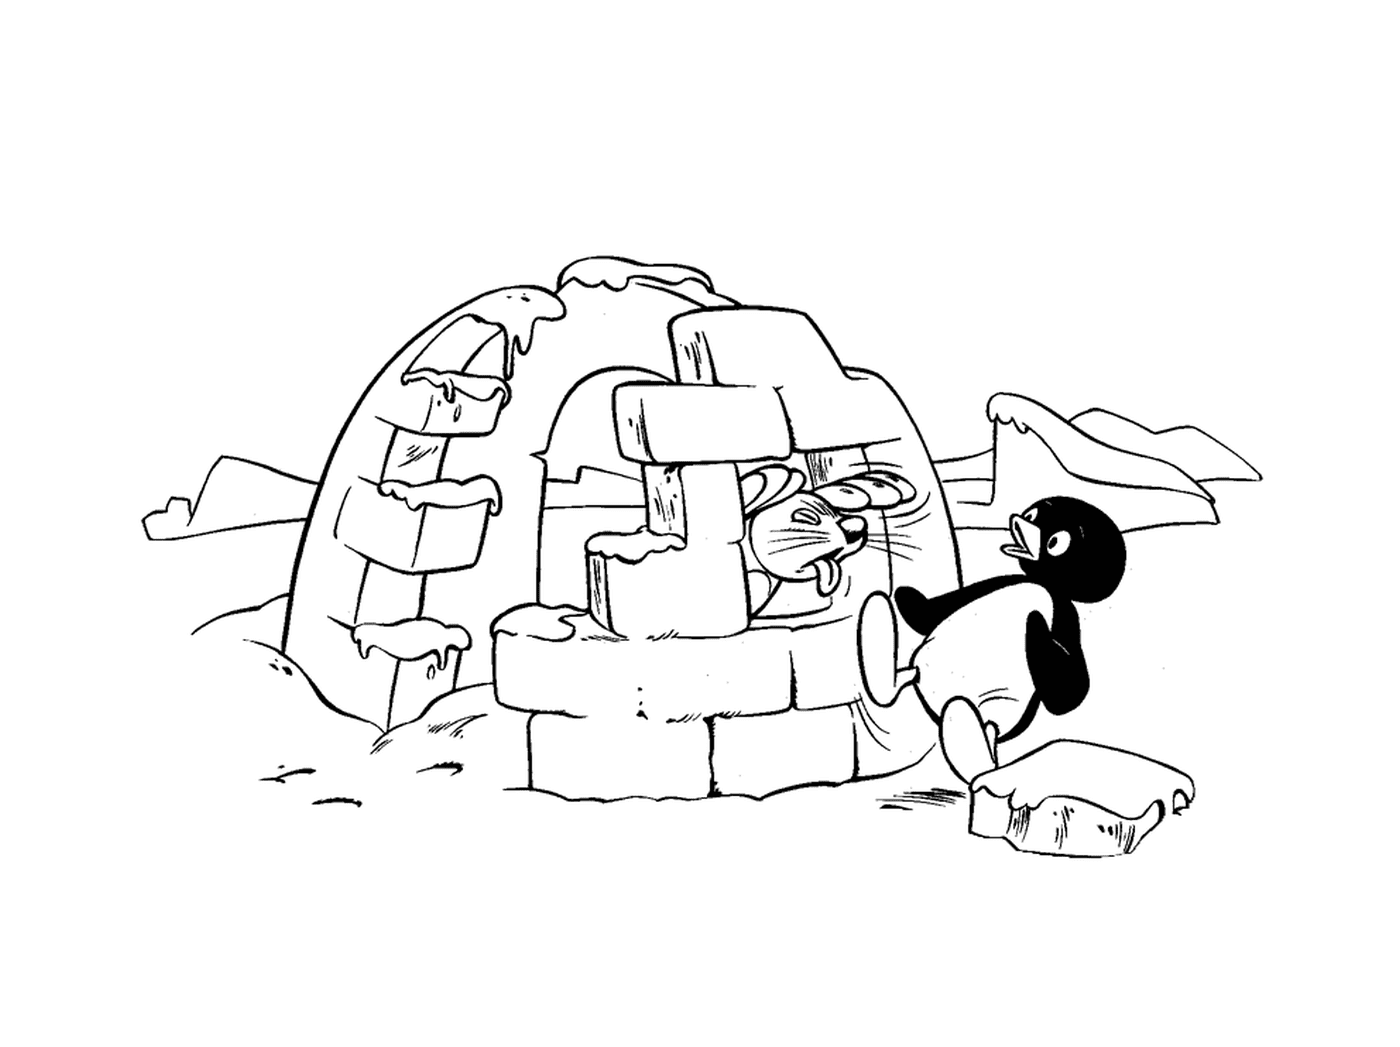   Pingu près d'un igloo avec un phoque 